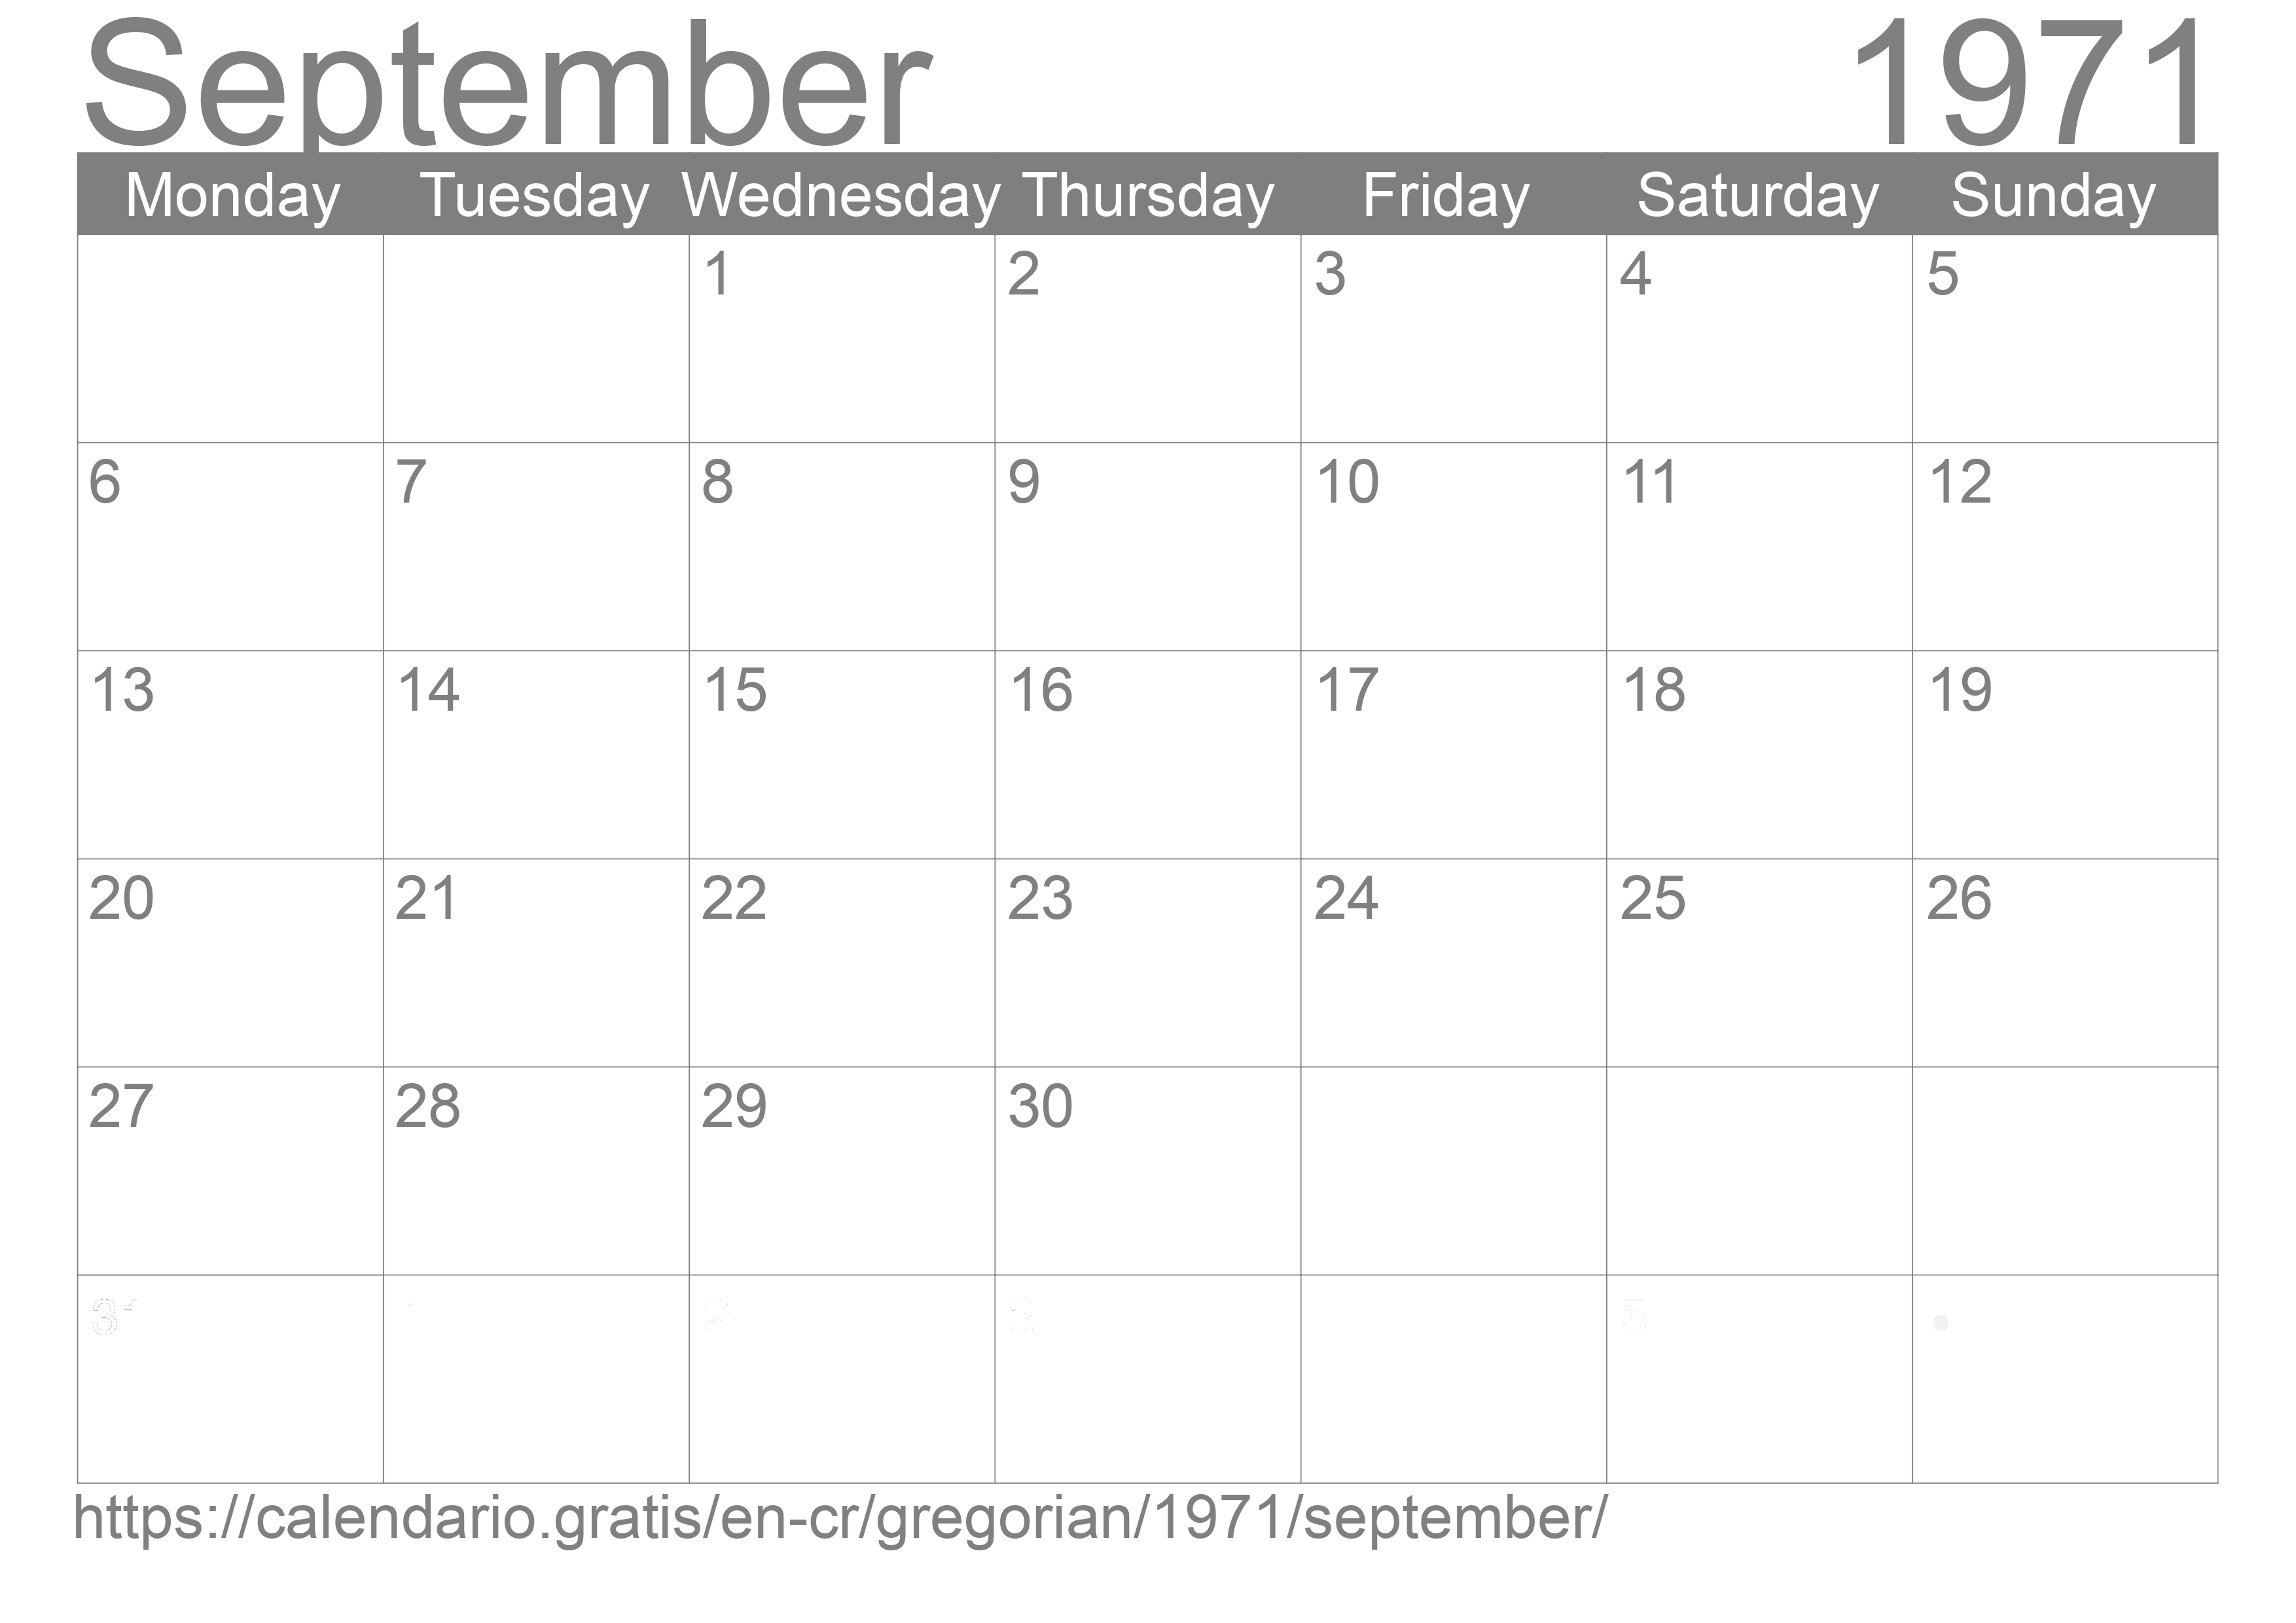 Calendar September 1971 to print